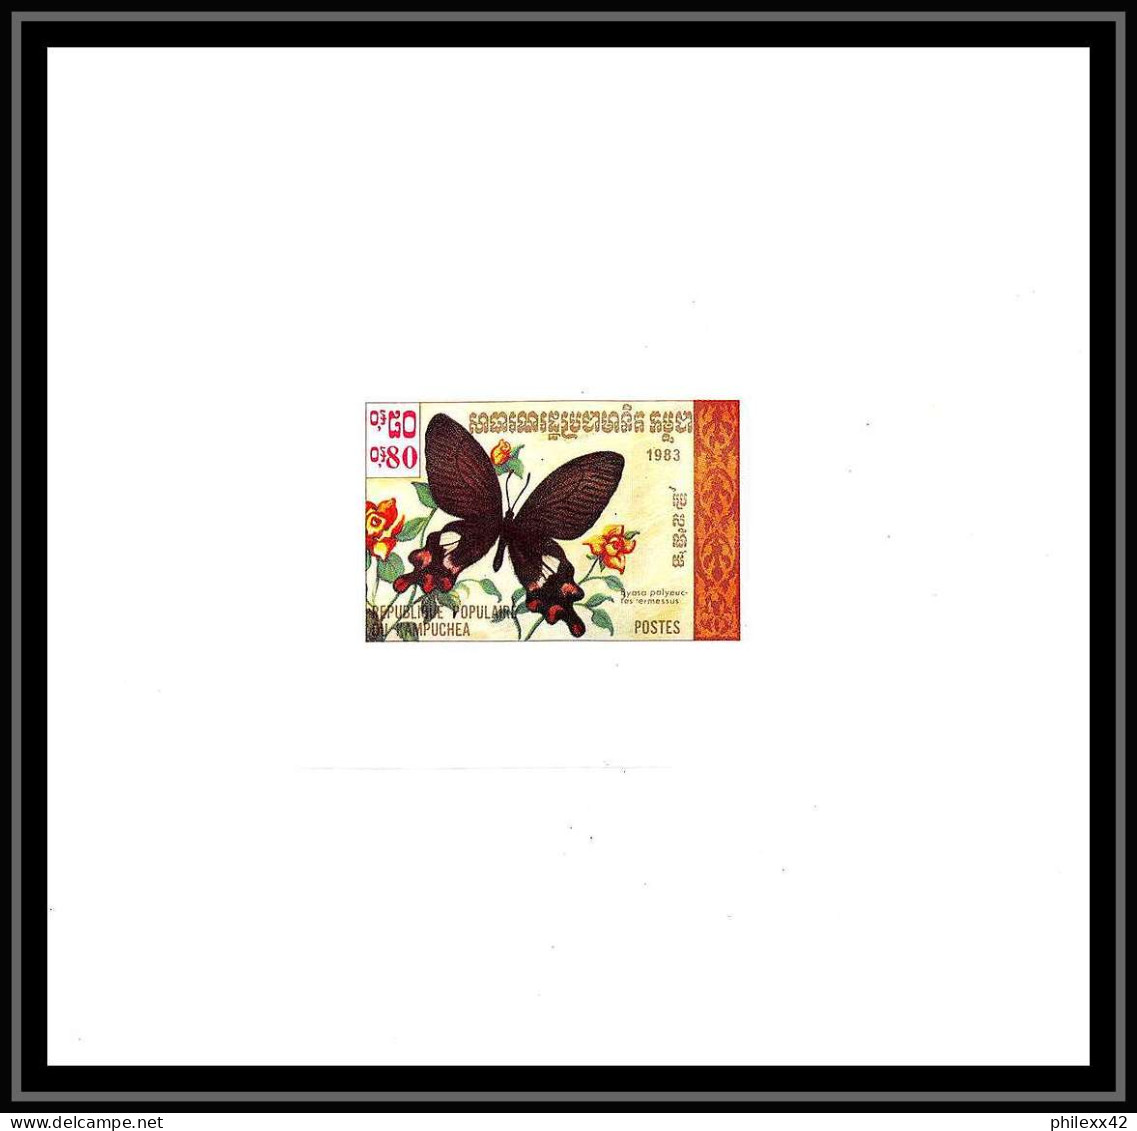 1076 épreuve de luxe / deluxe proof Kampuchéa - N° 369/375 Papillons Papillon Schmetterlinge butterfly butterflies